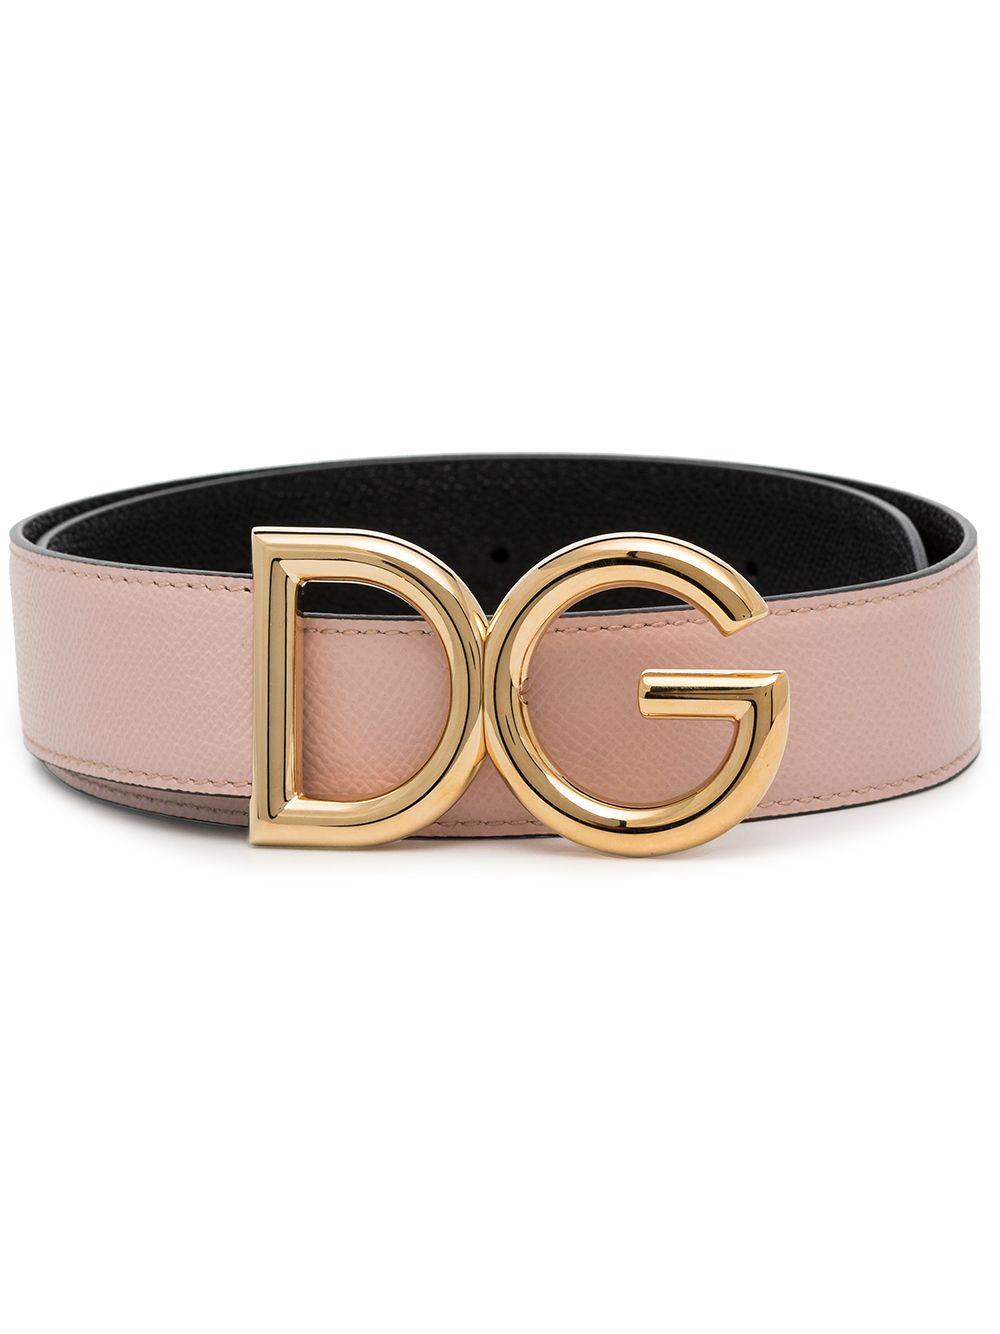 Dolce & Gabbana Logo Buckle Leather Belt in Pink - Lyst